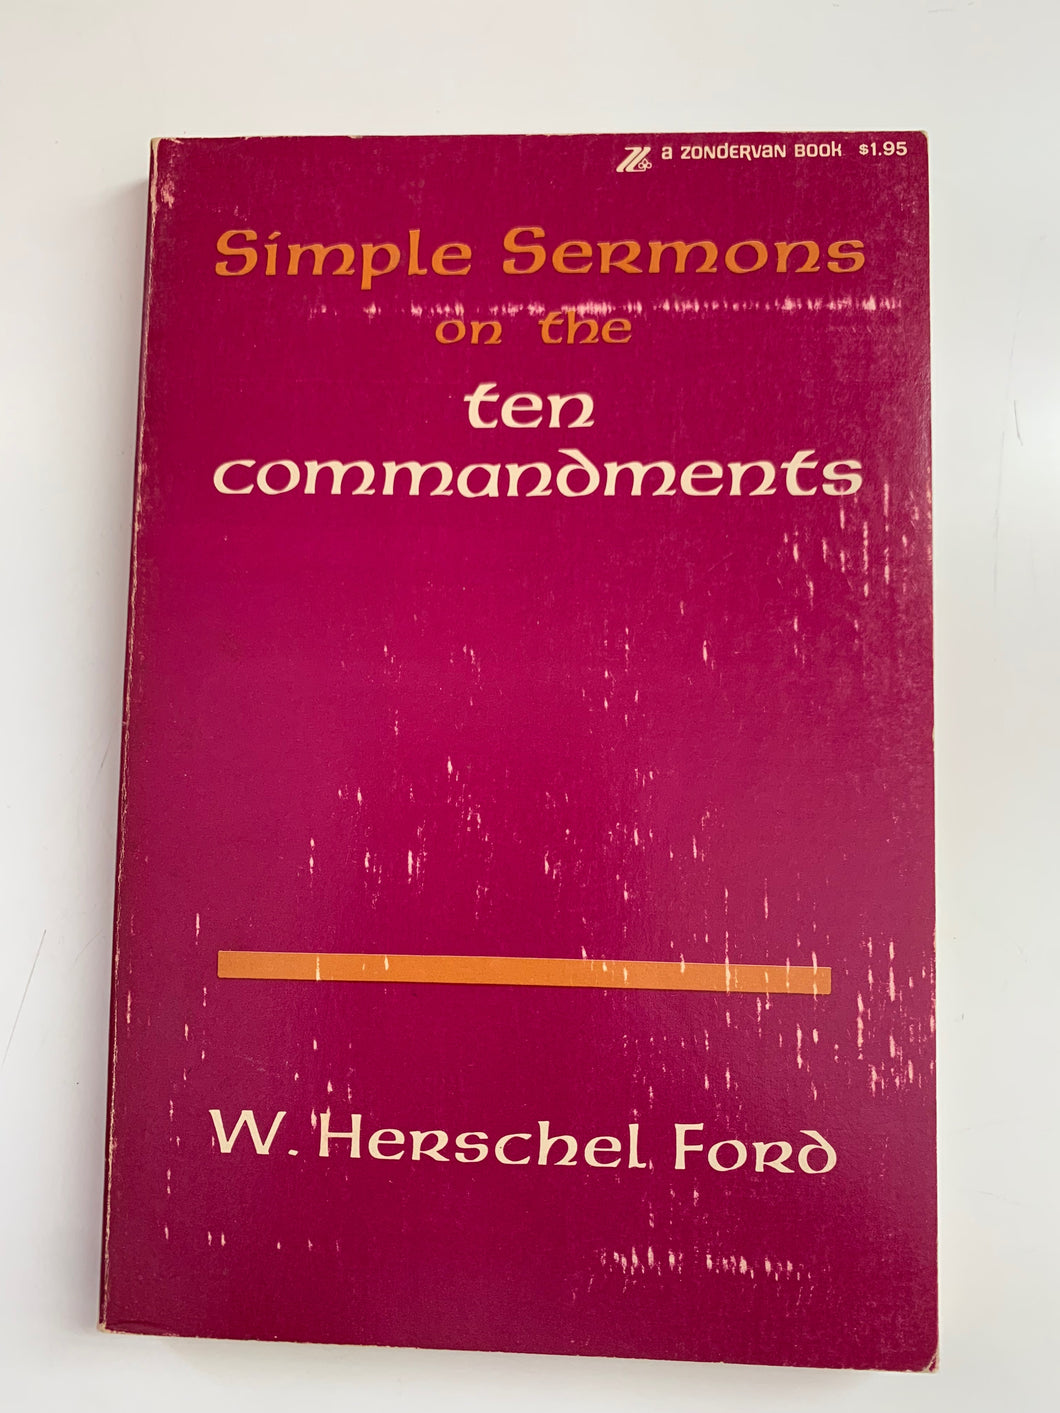 Simple Sermons on the Ten Commandments by W. Herschel Ford